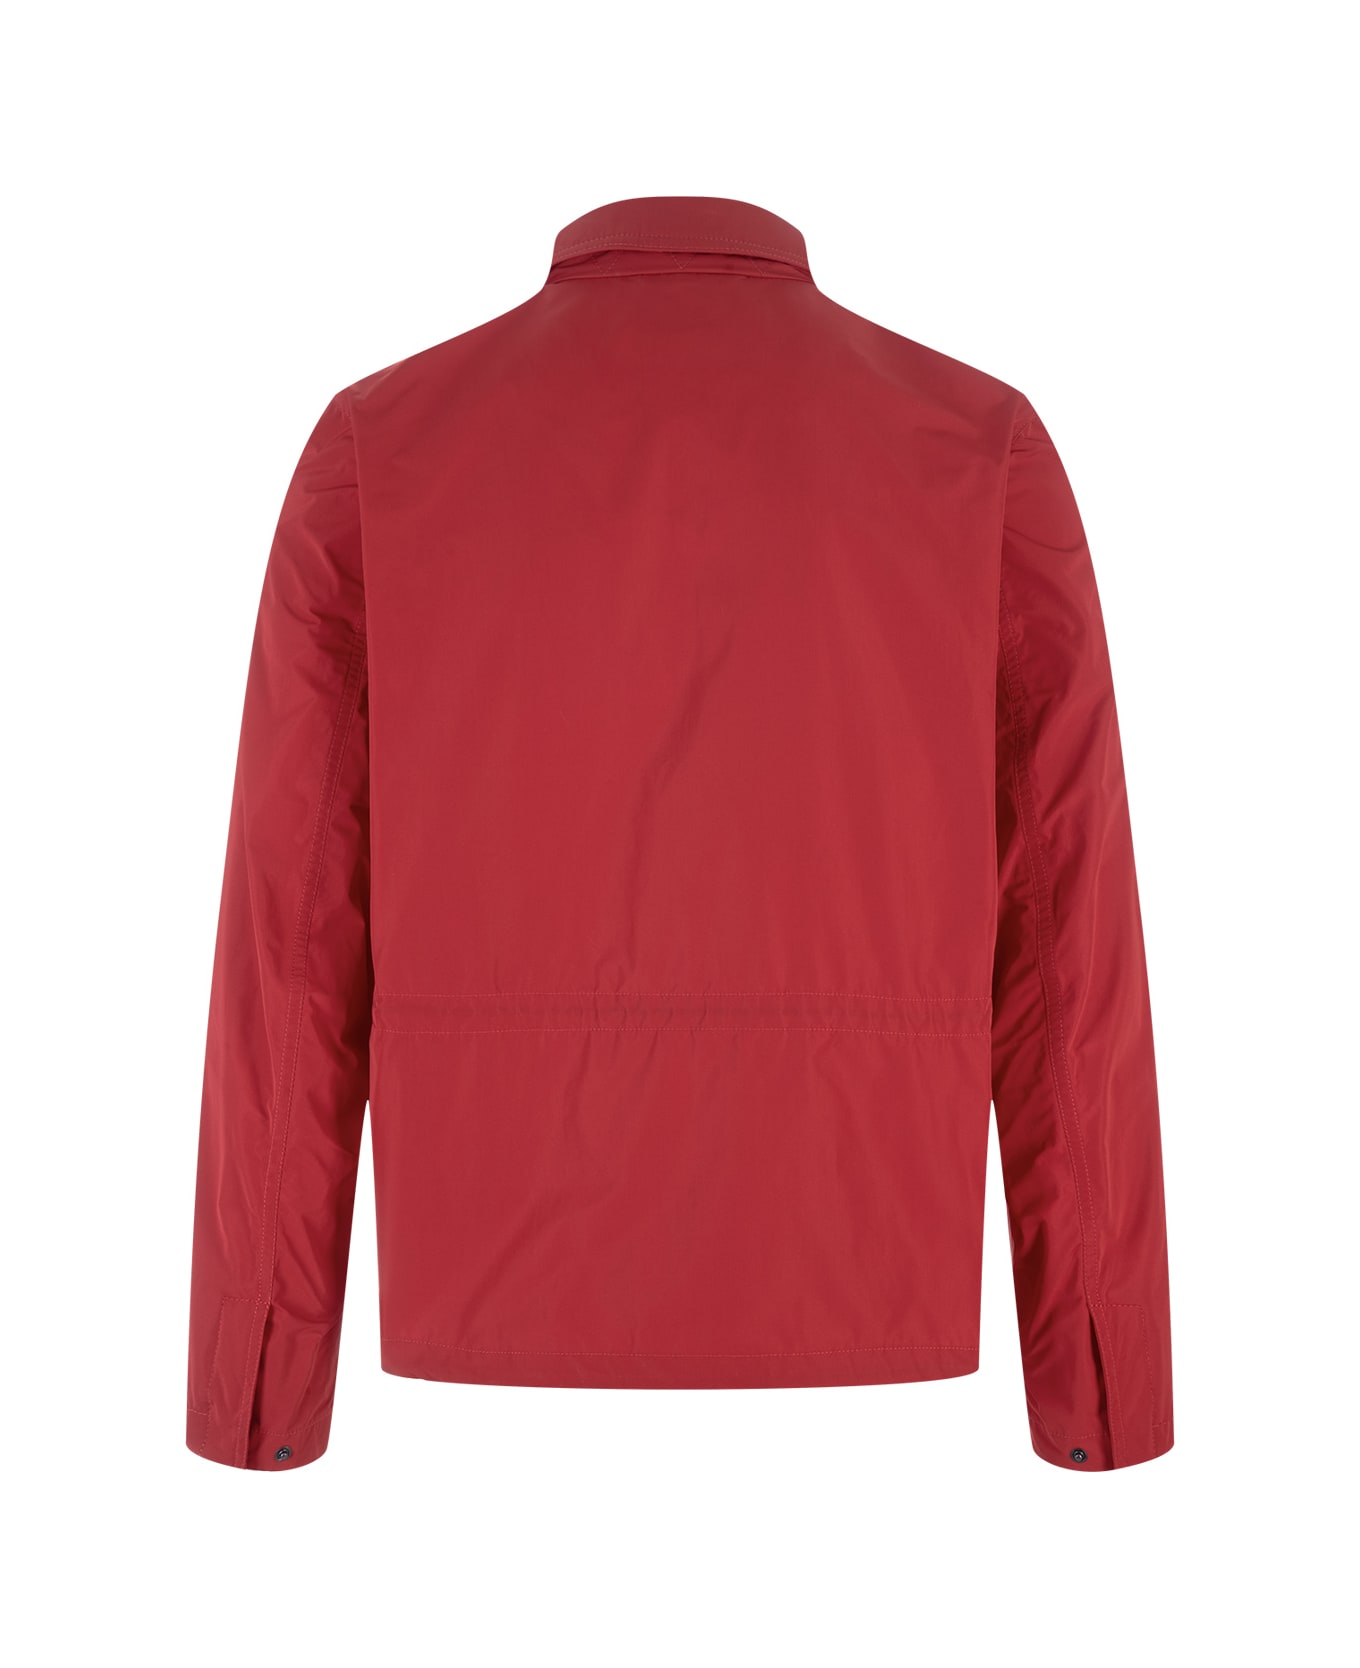 Aspesi Stringa Jacket In Red Taffeta - Rosso